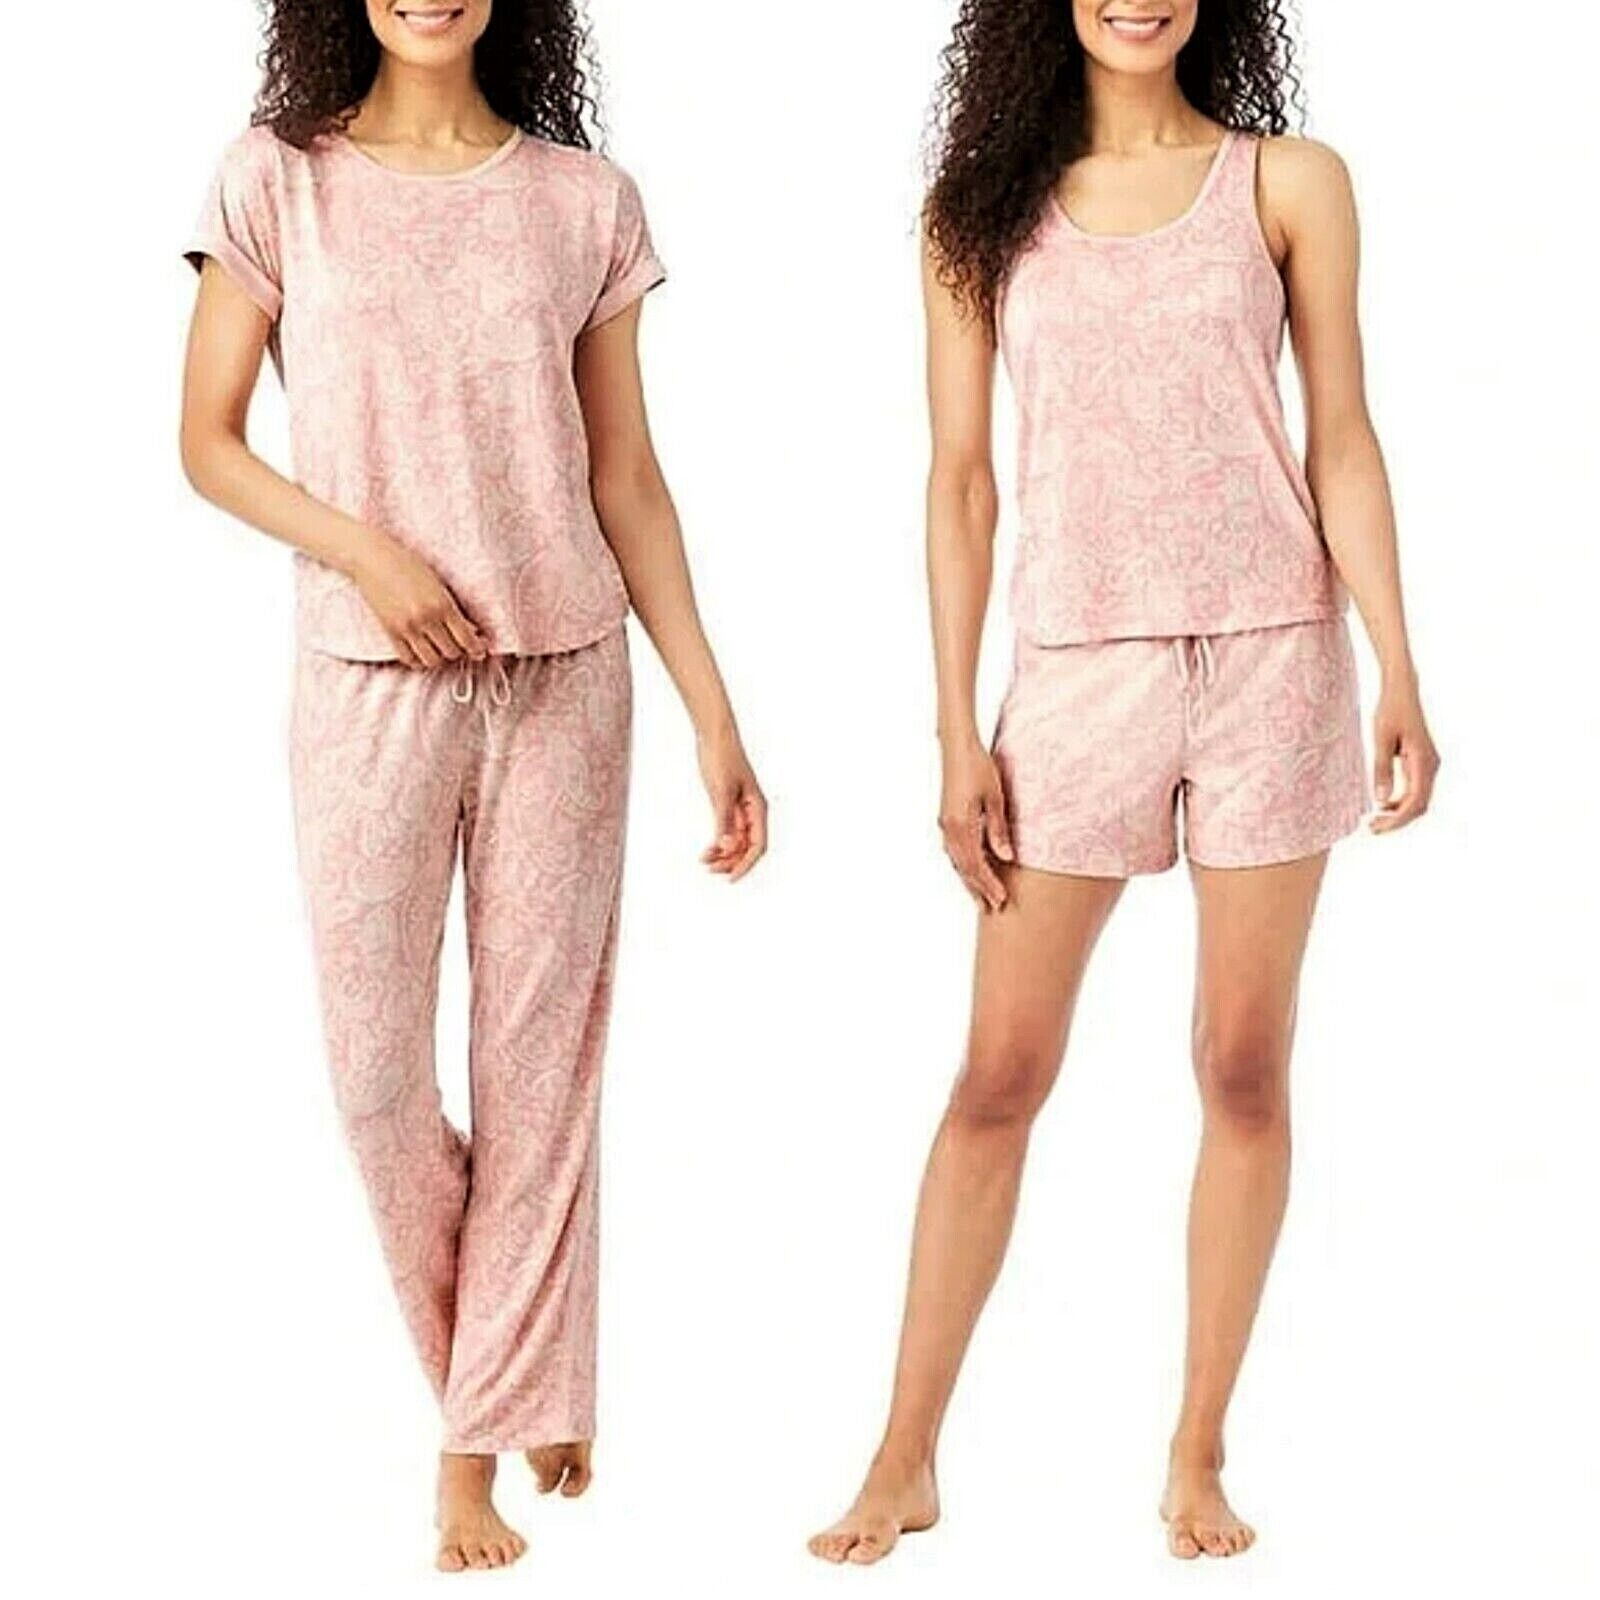 Lucky Brand Women's Denim Floral 4-Piece Lounge Pajama Set – Letay